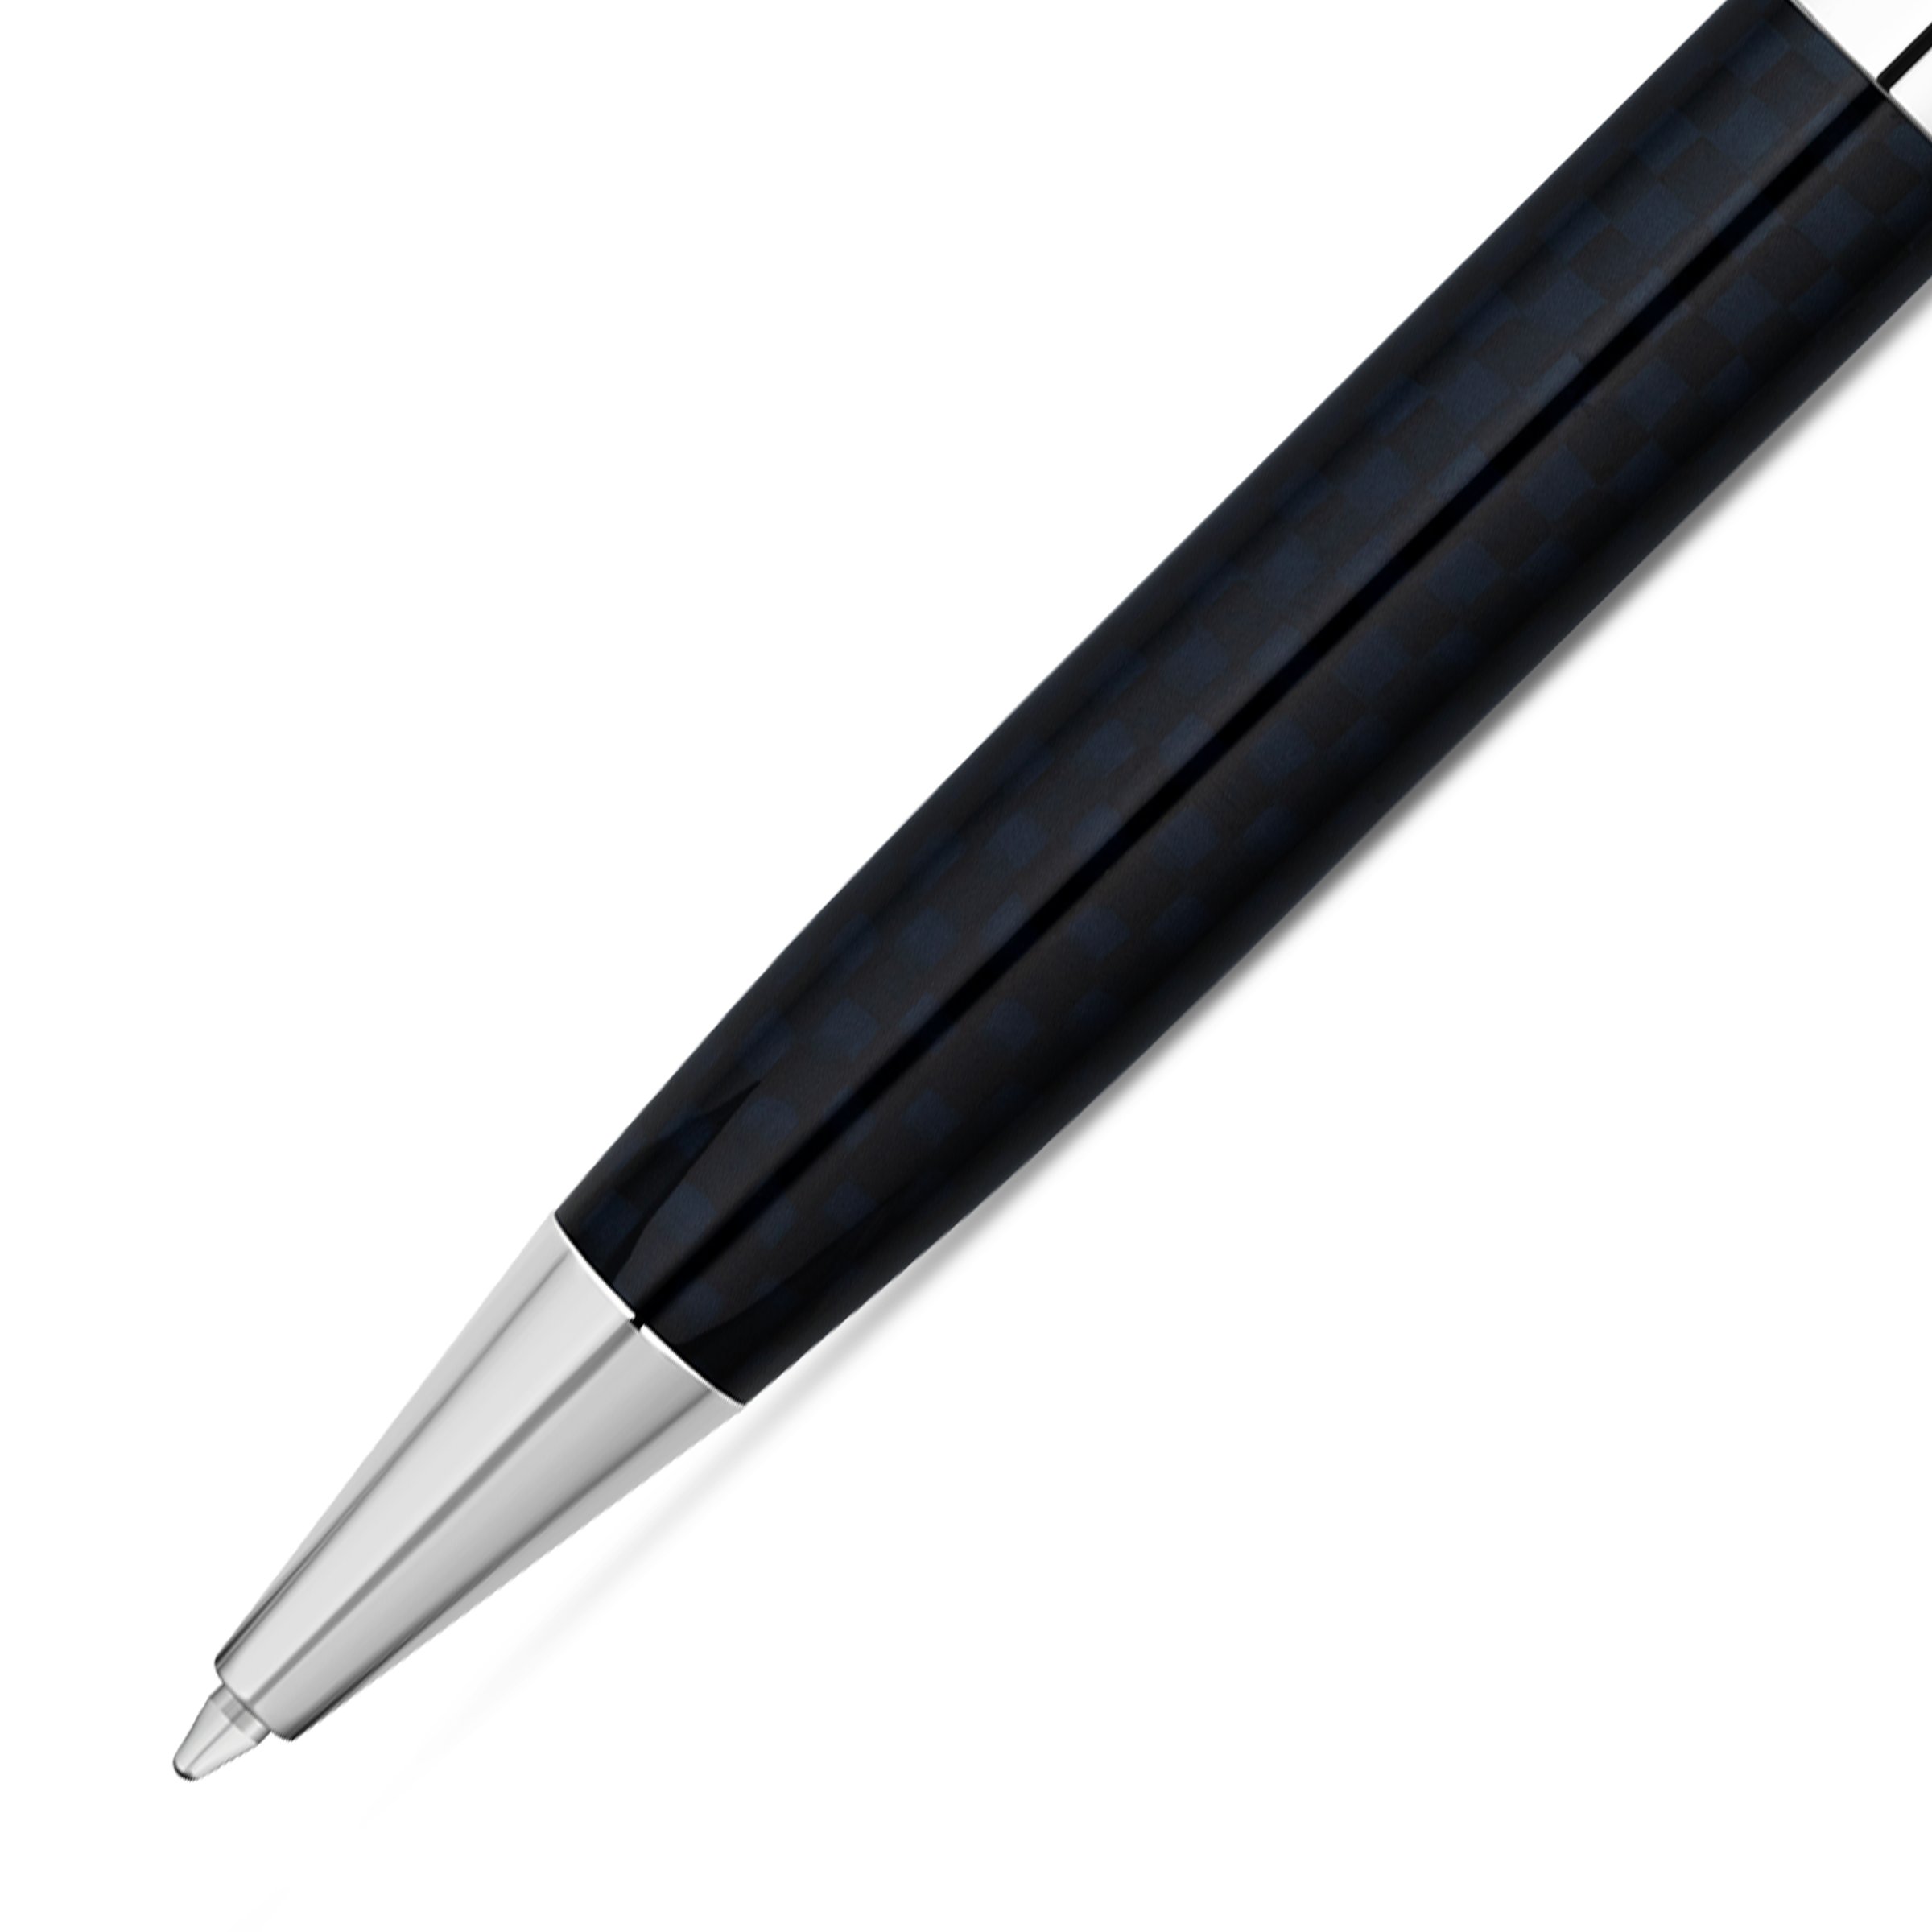 POLICE - Constantia Pen For Men Black & Gunmetal Color, Ball Point - PERGR0002801 2